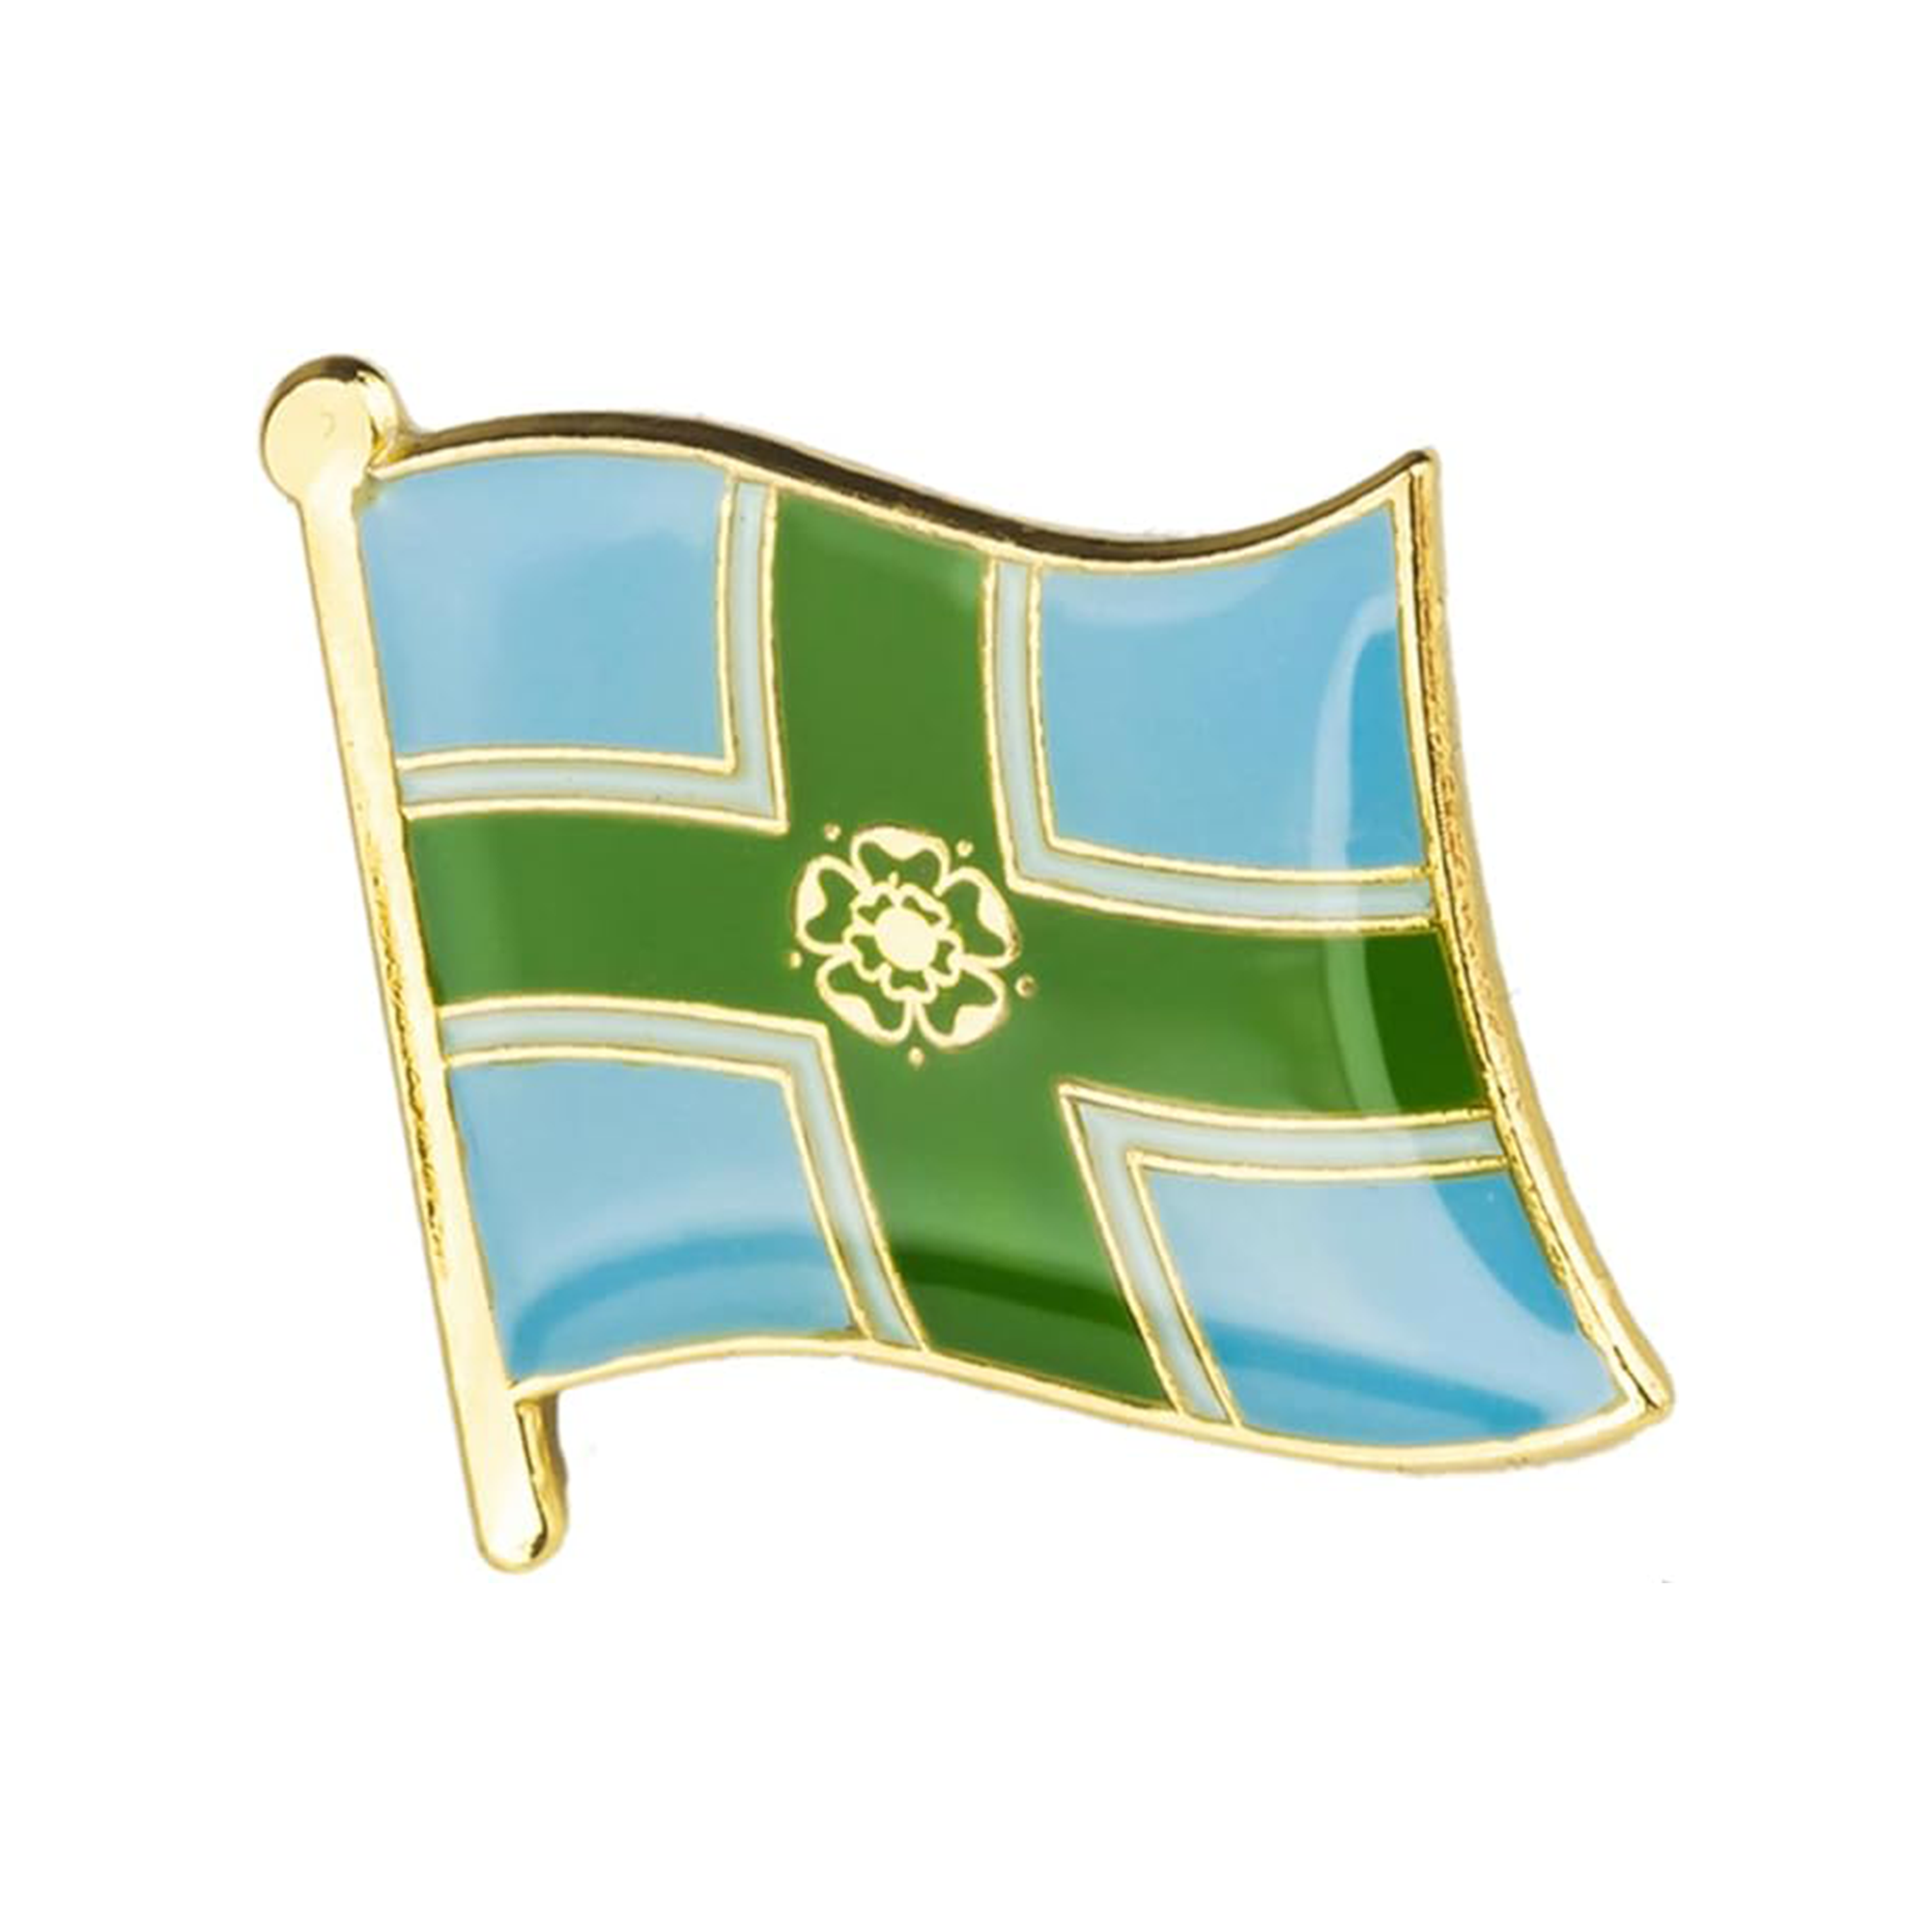 Derbyshire Regional English County Flag Pin Badge